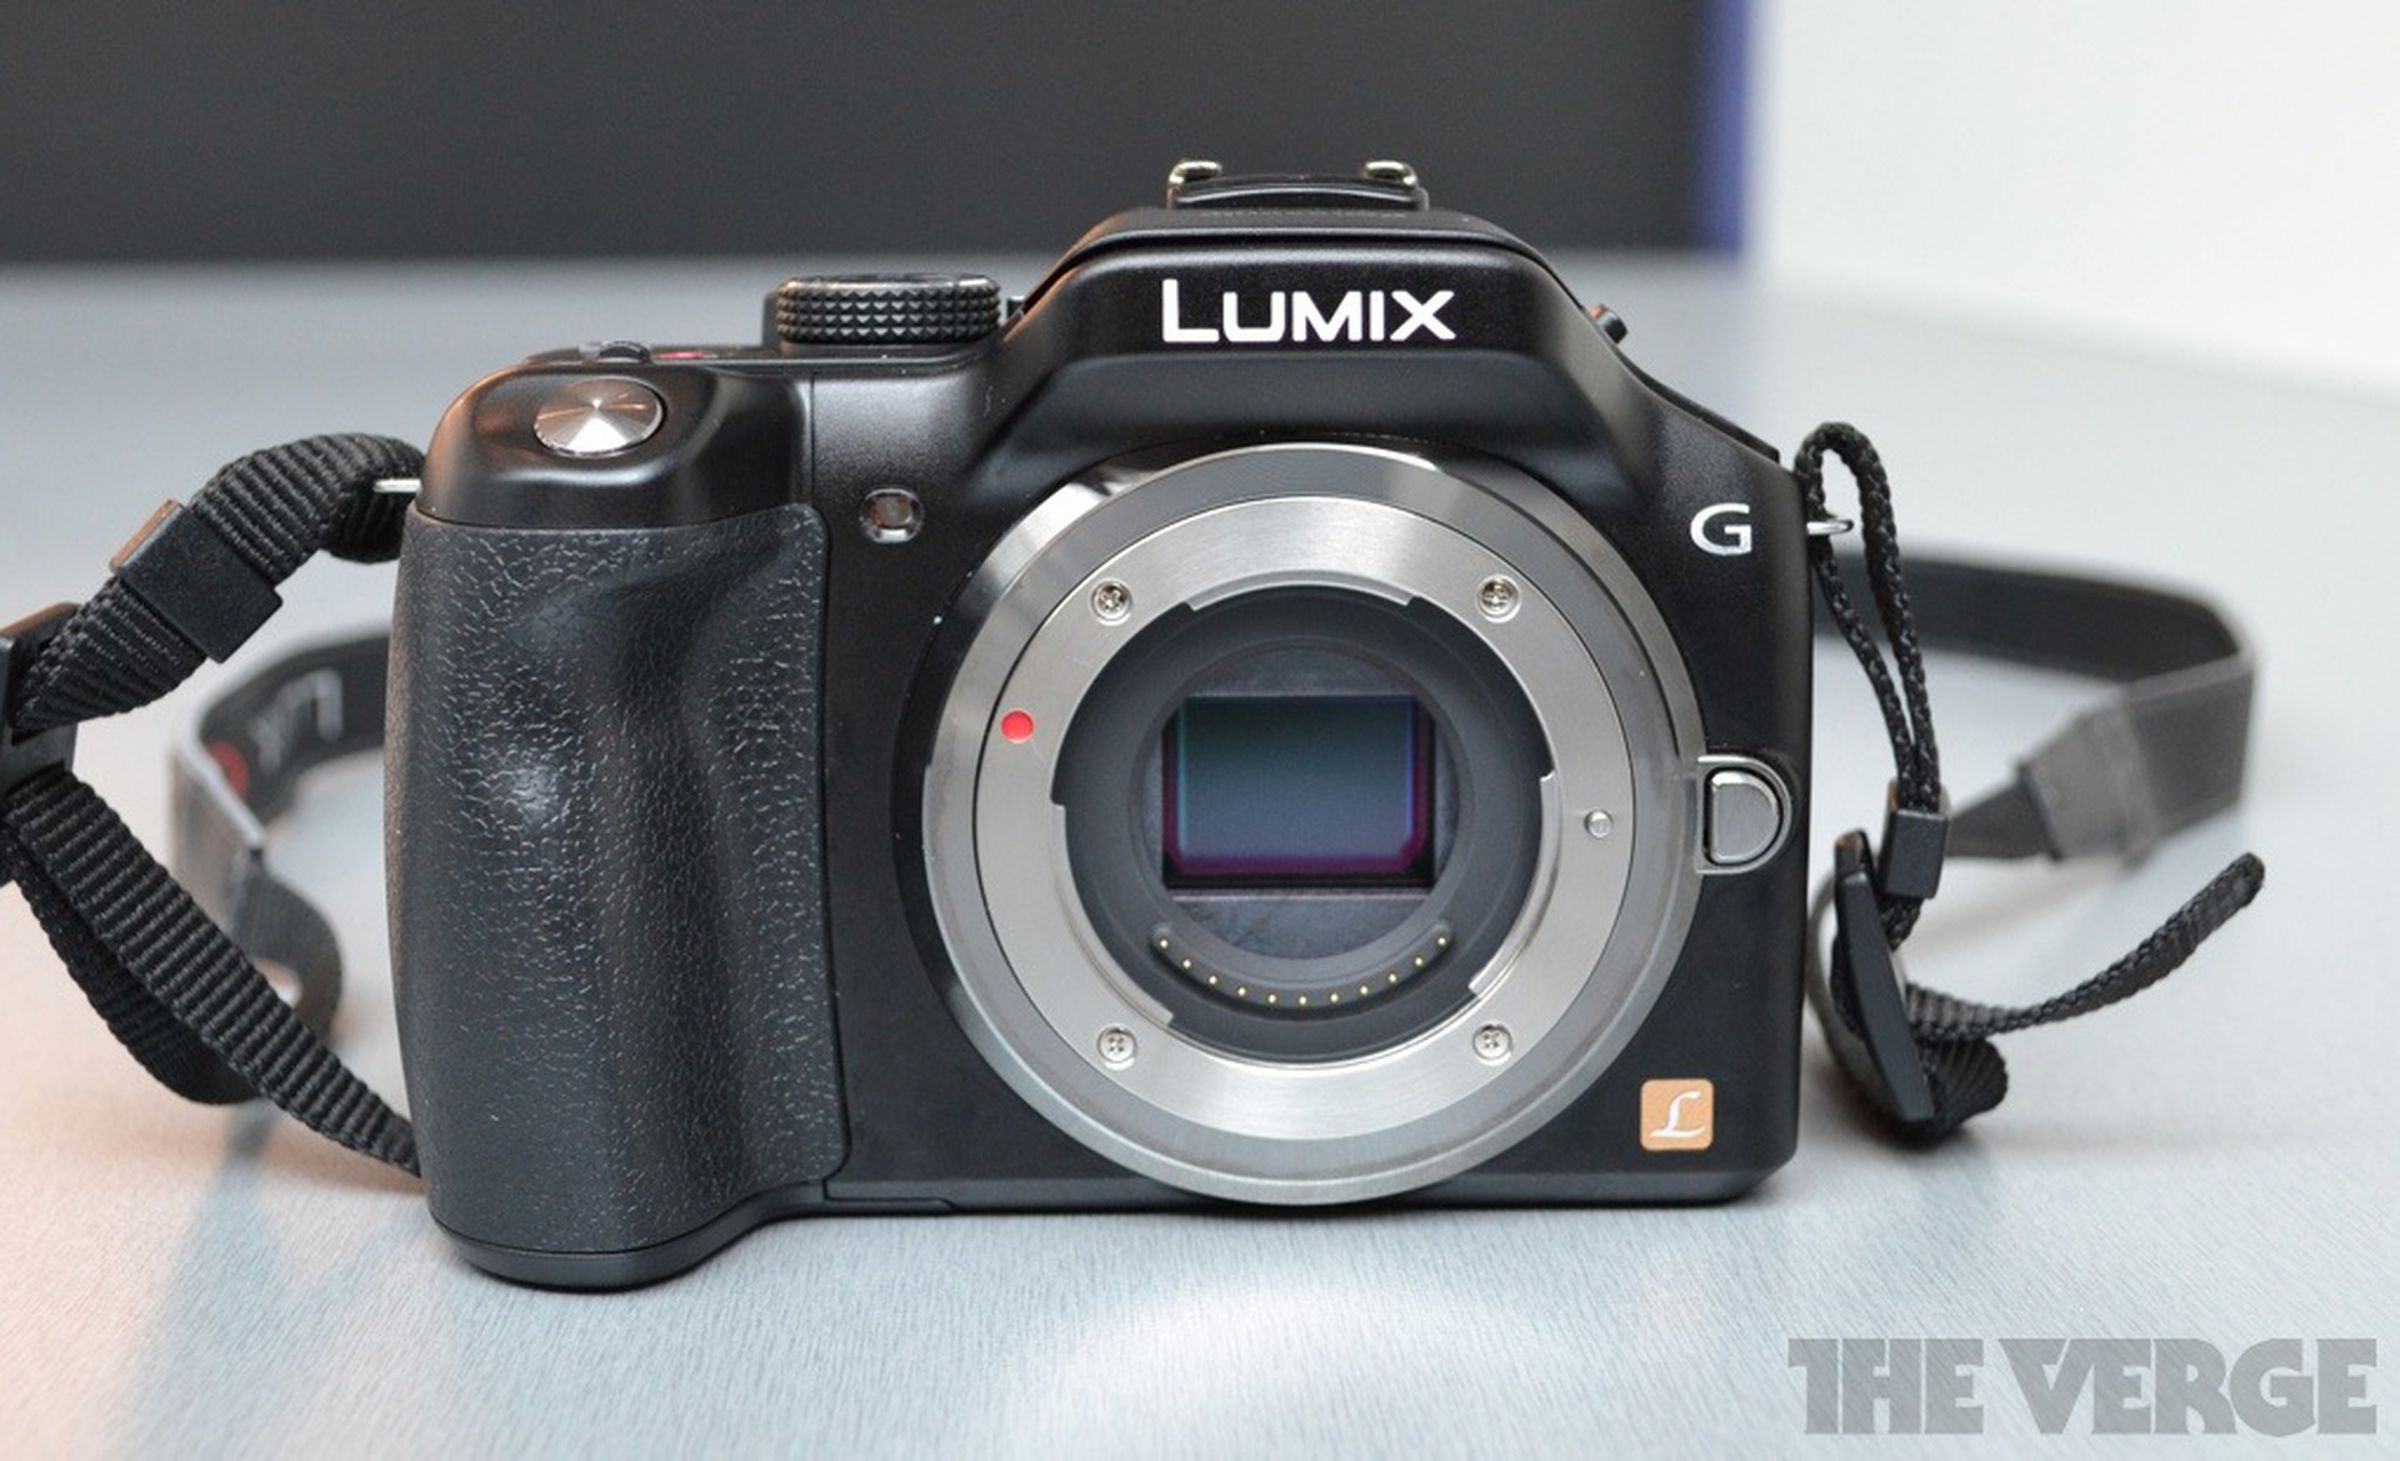 Panasonic Lumix DMC-G5 hands-on pictures